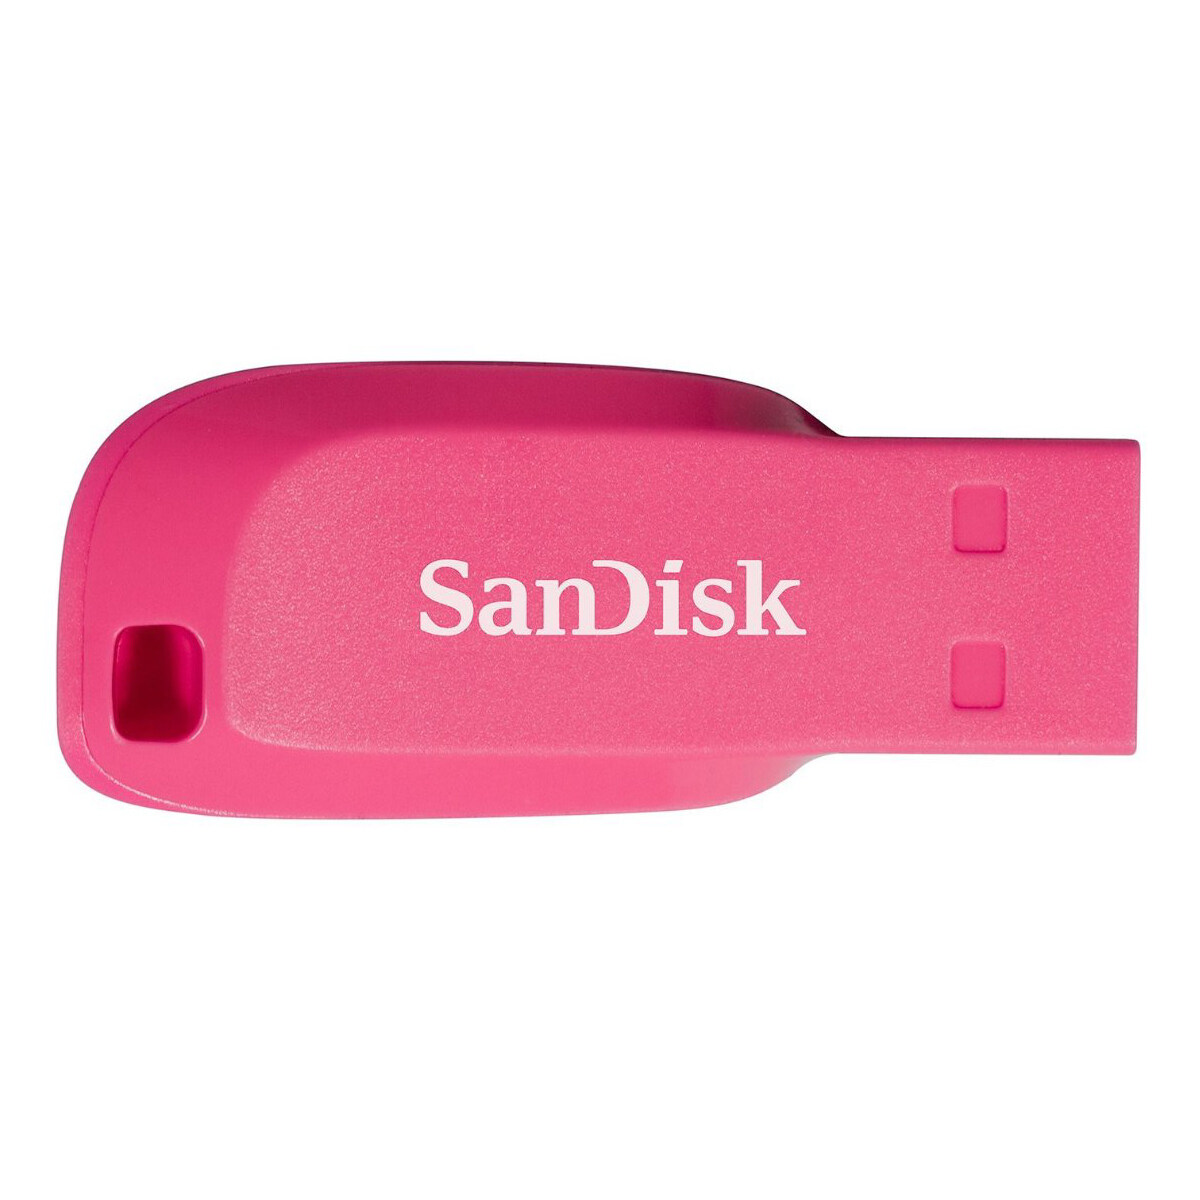 Sandisk Cruzer Blade CZ50 (16GB / 32GB / 64GB / 128GB) USB2.0 Pendrive Flash Drive (Black/Pink/White)